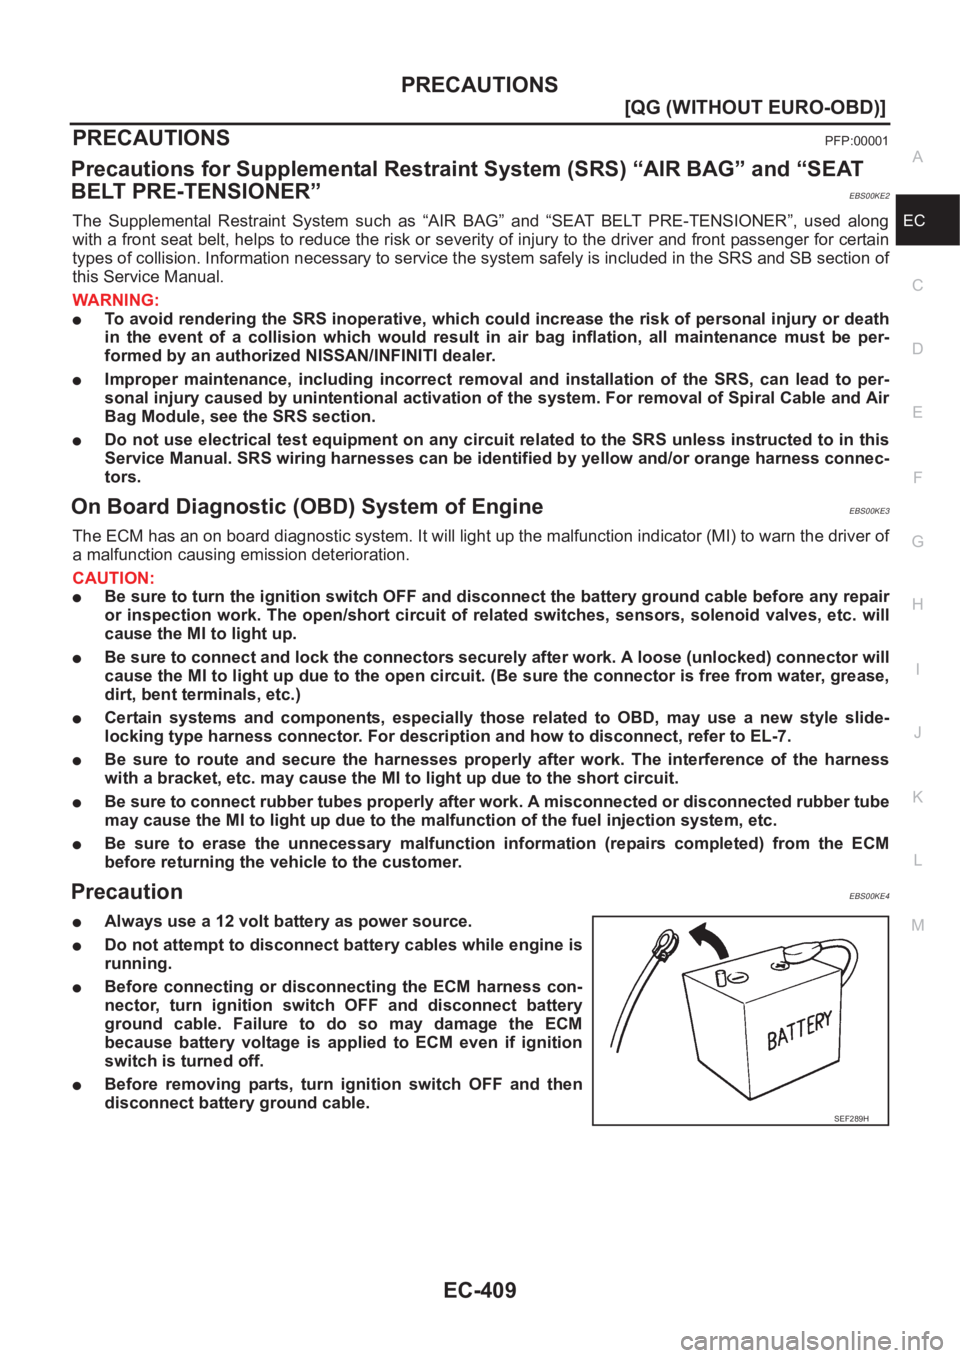 NISSAN ALMERA N16 2003  Electronic Repair Manual PRECAUTIONS
EC-409
[QG (WITHOUT EURO-OBD)]
C
D
E
F
G
H
I
J
K
L
MA
EC
PRECAUTIONSPFP:00001
Precautions for Supplemental Restraint System (SRS) “AIR BAG” and “SEAT 
BELT PRE-TENSIONER”
EBS00KE2
